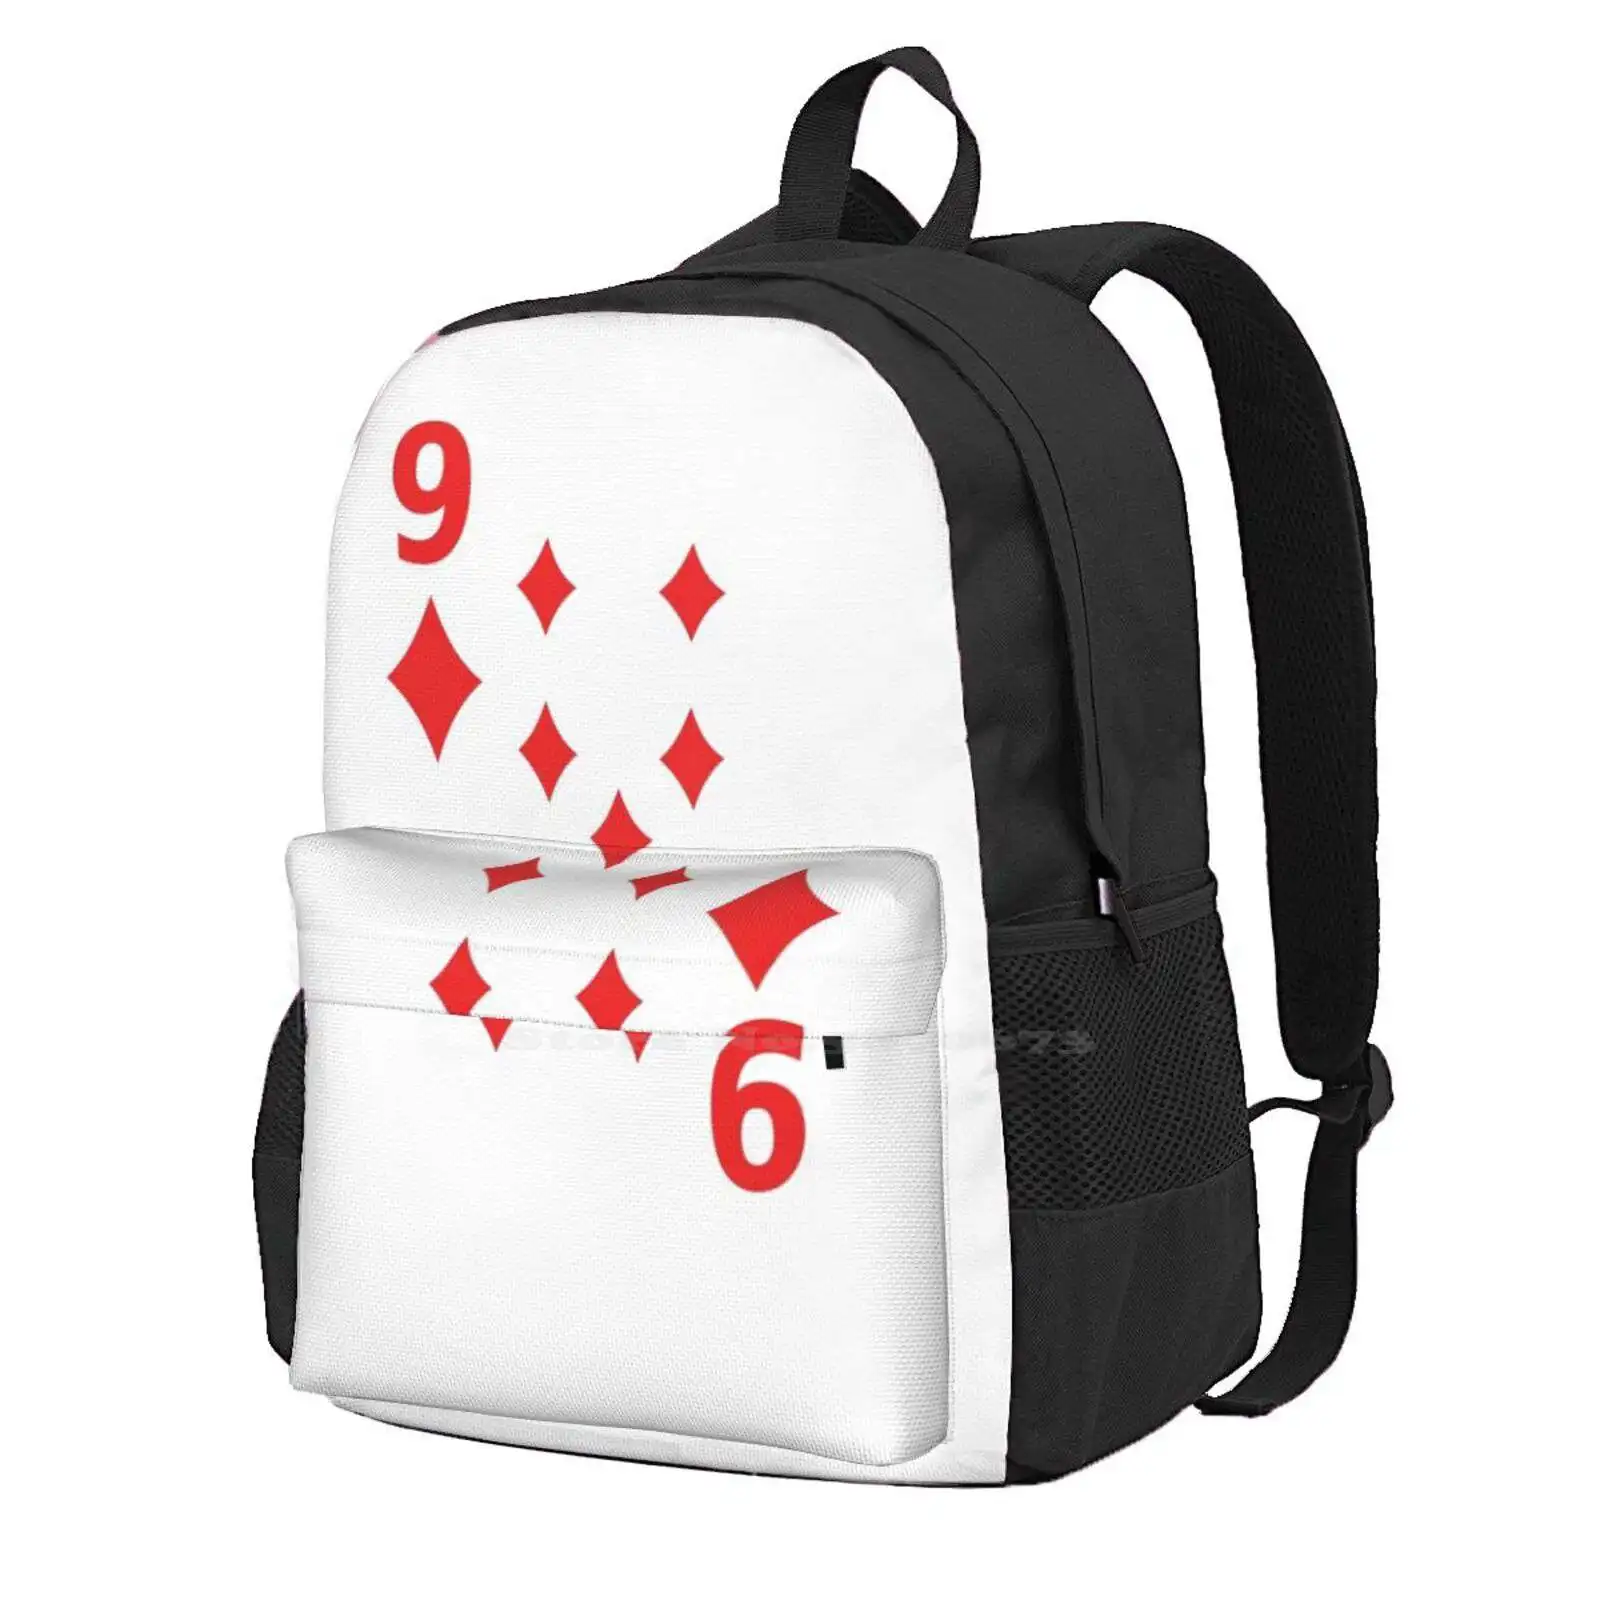 

Nine Of Diamonds Poker Playing Card Costume 9 Hot Sale Backpack Fashion Bags Nine Of Diamonds Gamble Gambling Group Family